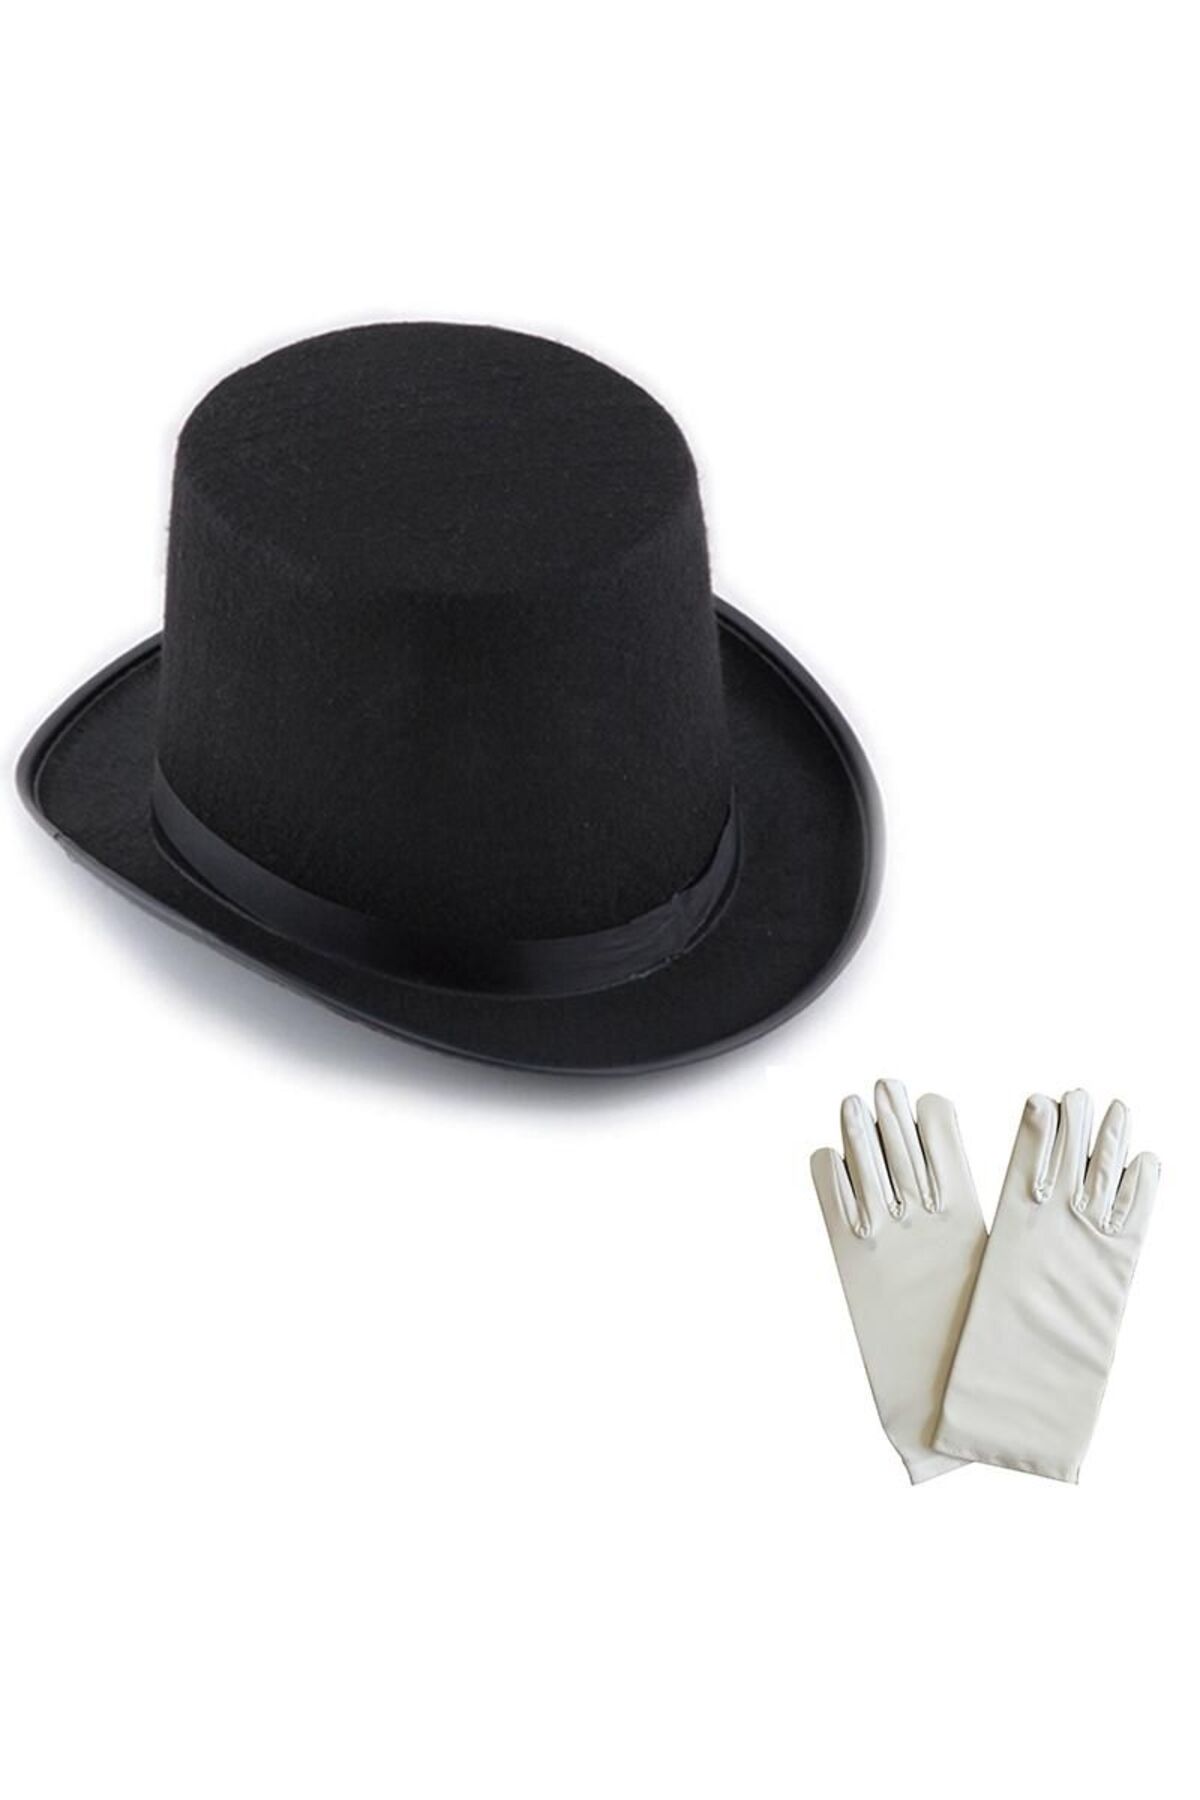 Skygo Siyah Sihirbaz Fötr Şapka PM - 1 Çift Beyaz Sihirbaz Eldiveni - Yetişkin Boy